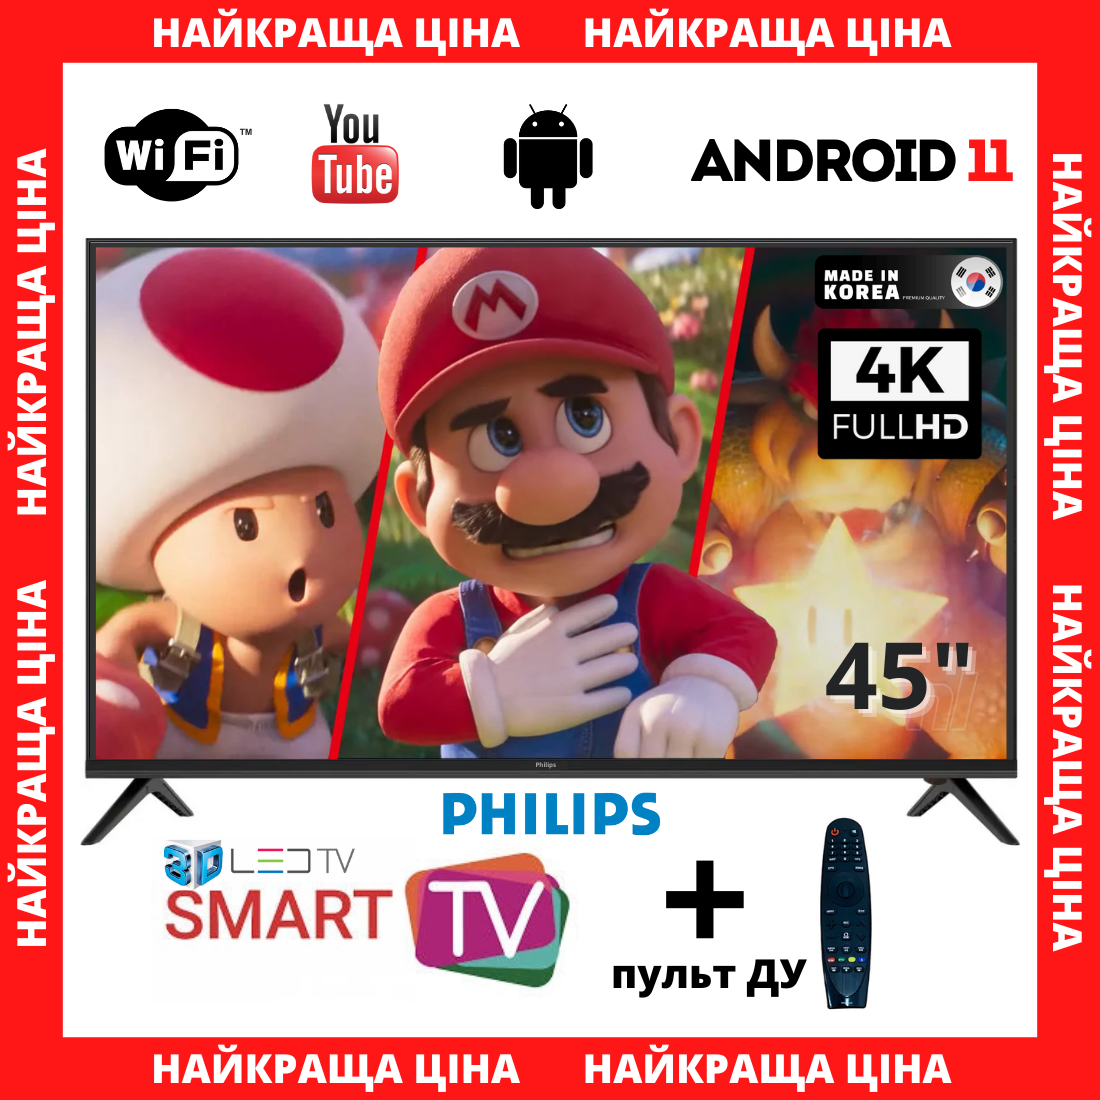 Телевізор Philips 45" Smart-TV/Full HD/DVB-T2/USB (1920×1080) Android 11 + пульт ДУ